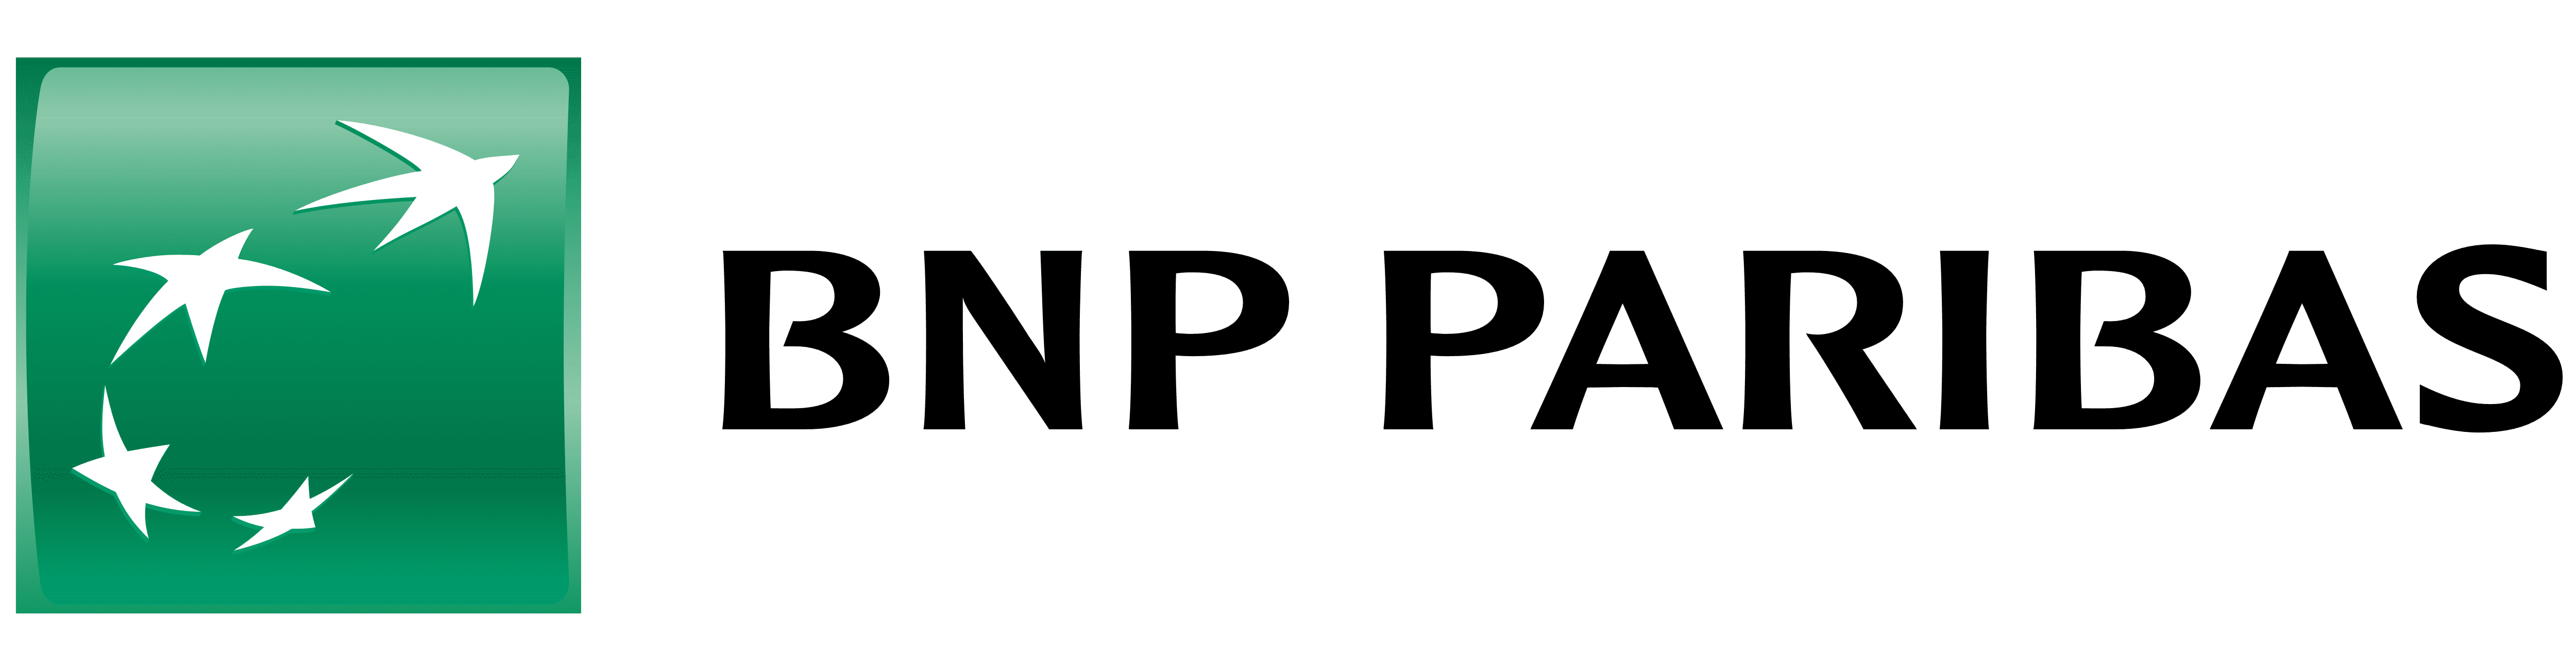 BNP Paribas logo client